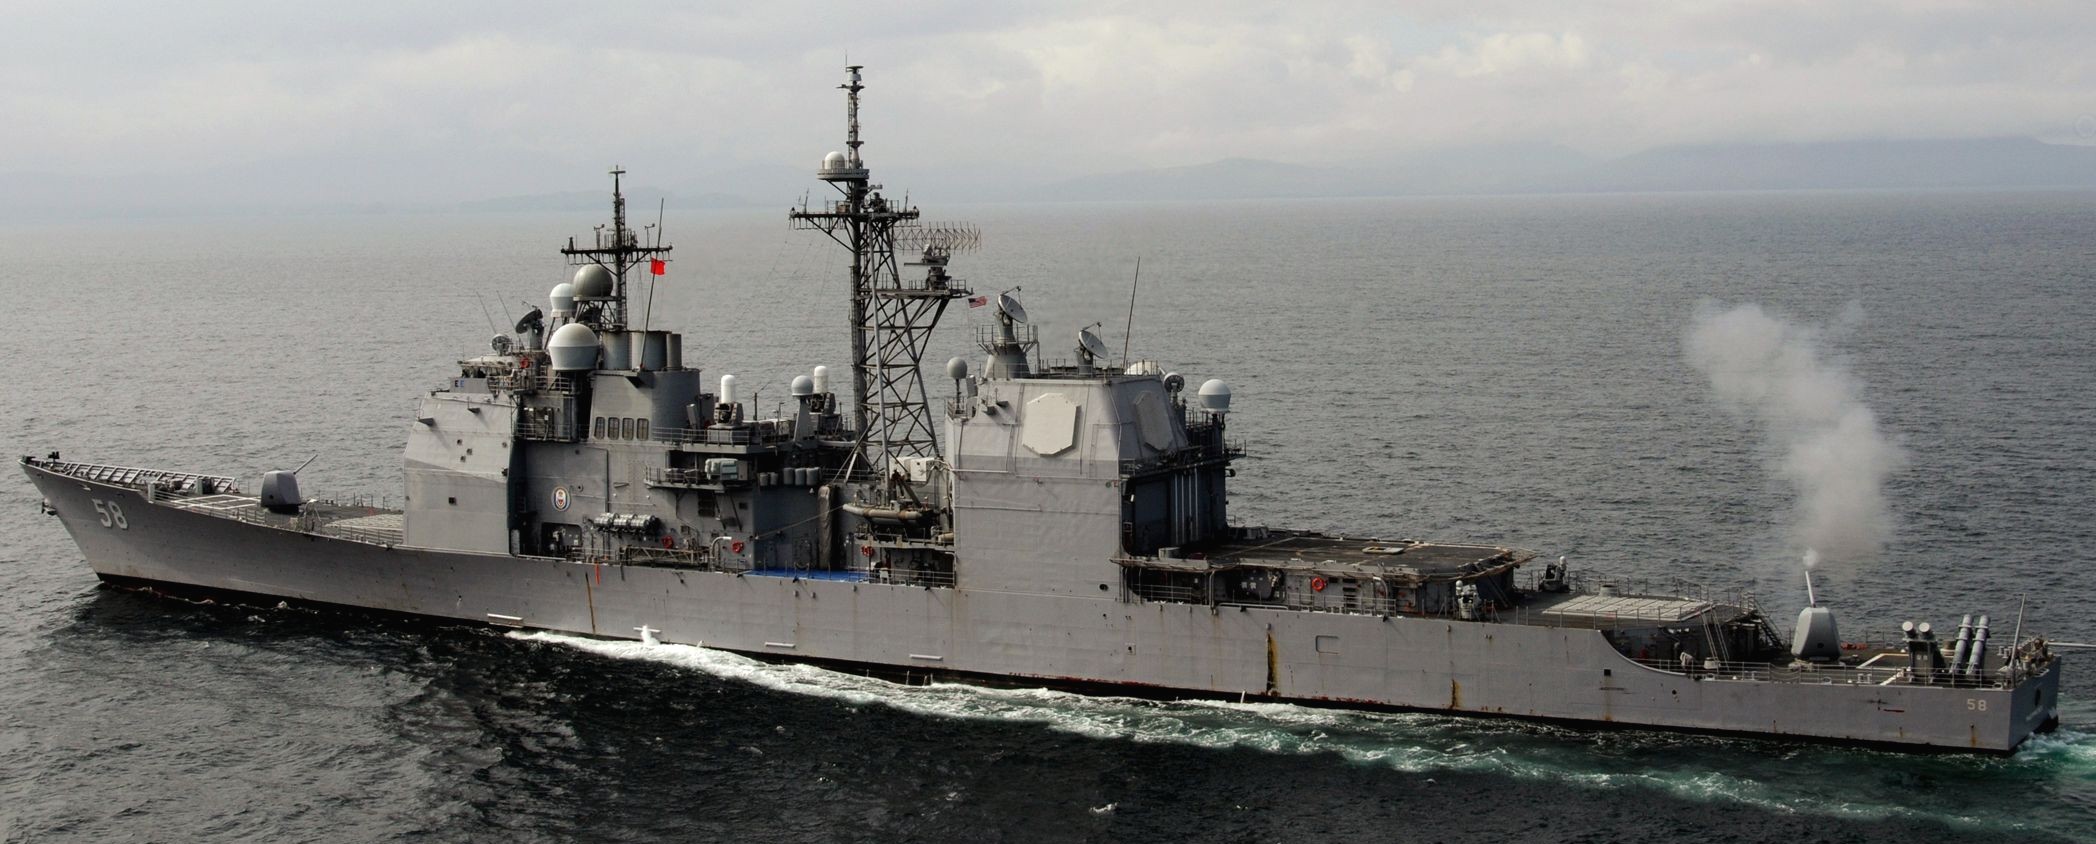 cg-58 uss philippine sea ticonderoga class guided missile cruiser aegis us navy 30